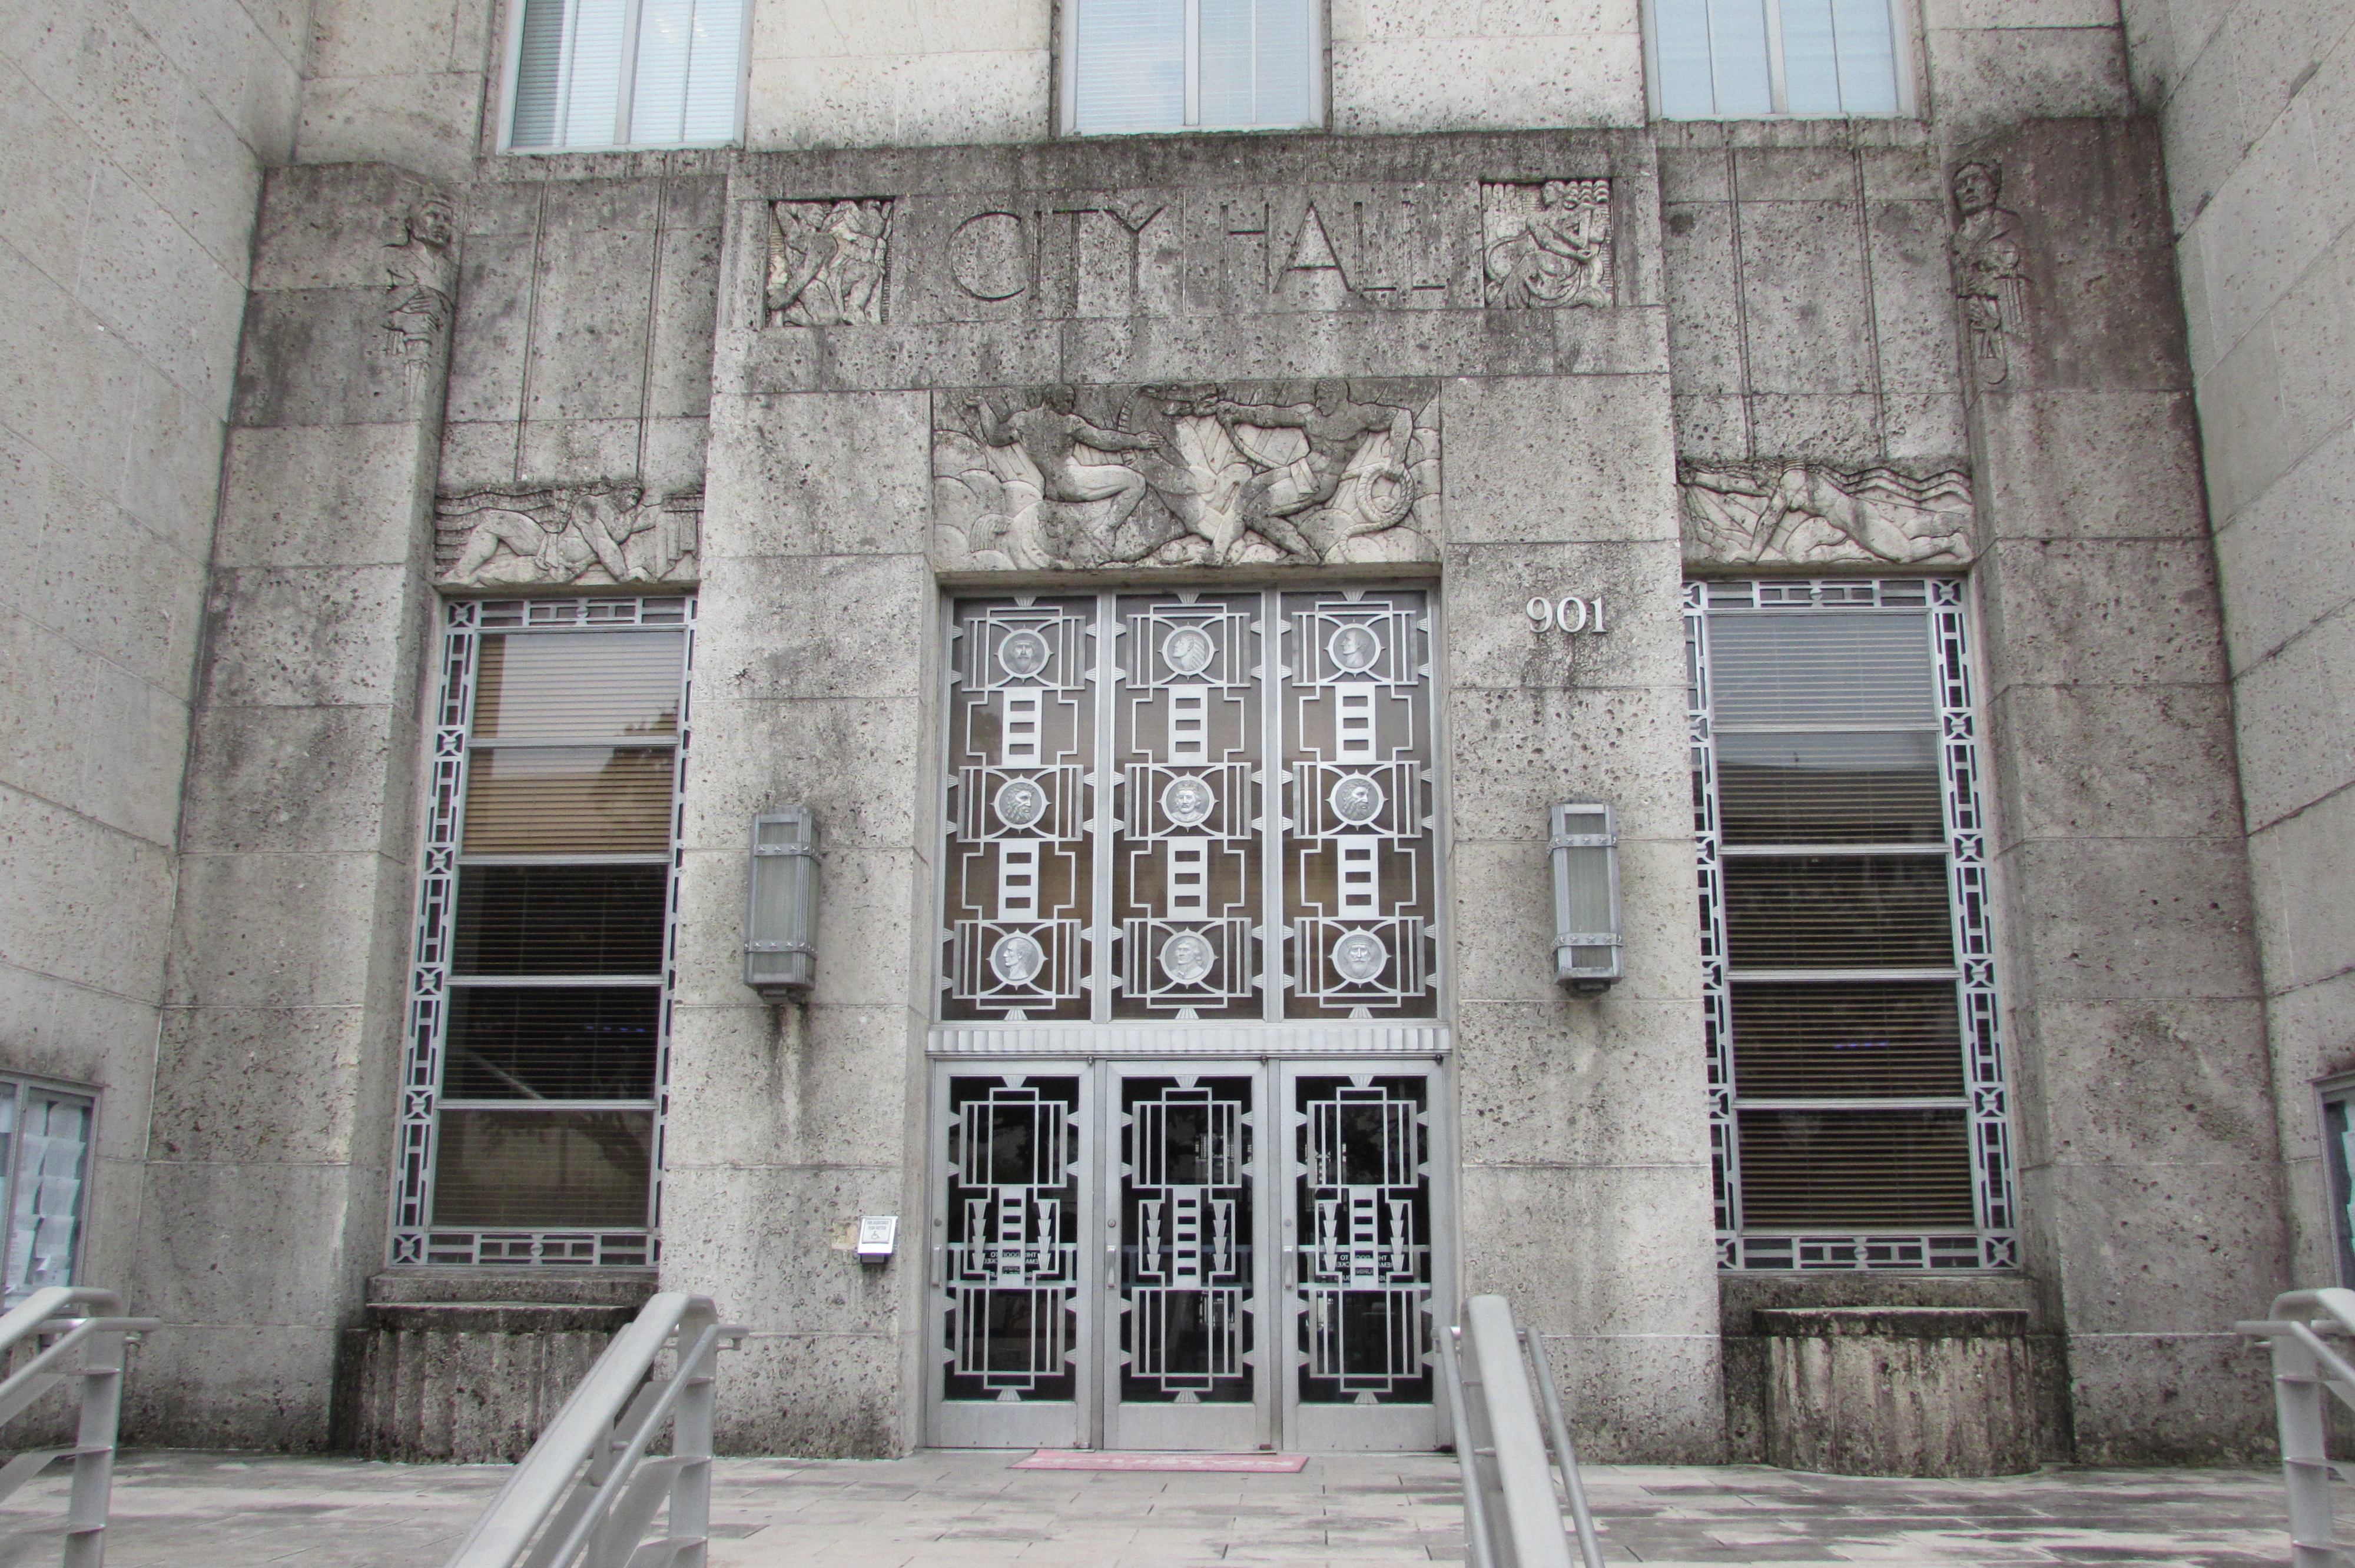 Entrance to Houston City Hall.